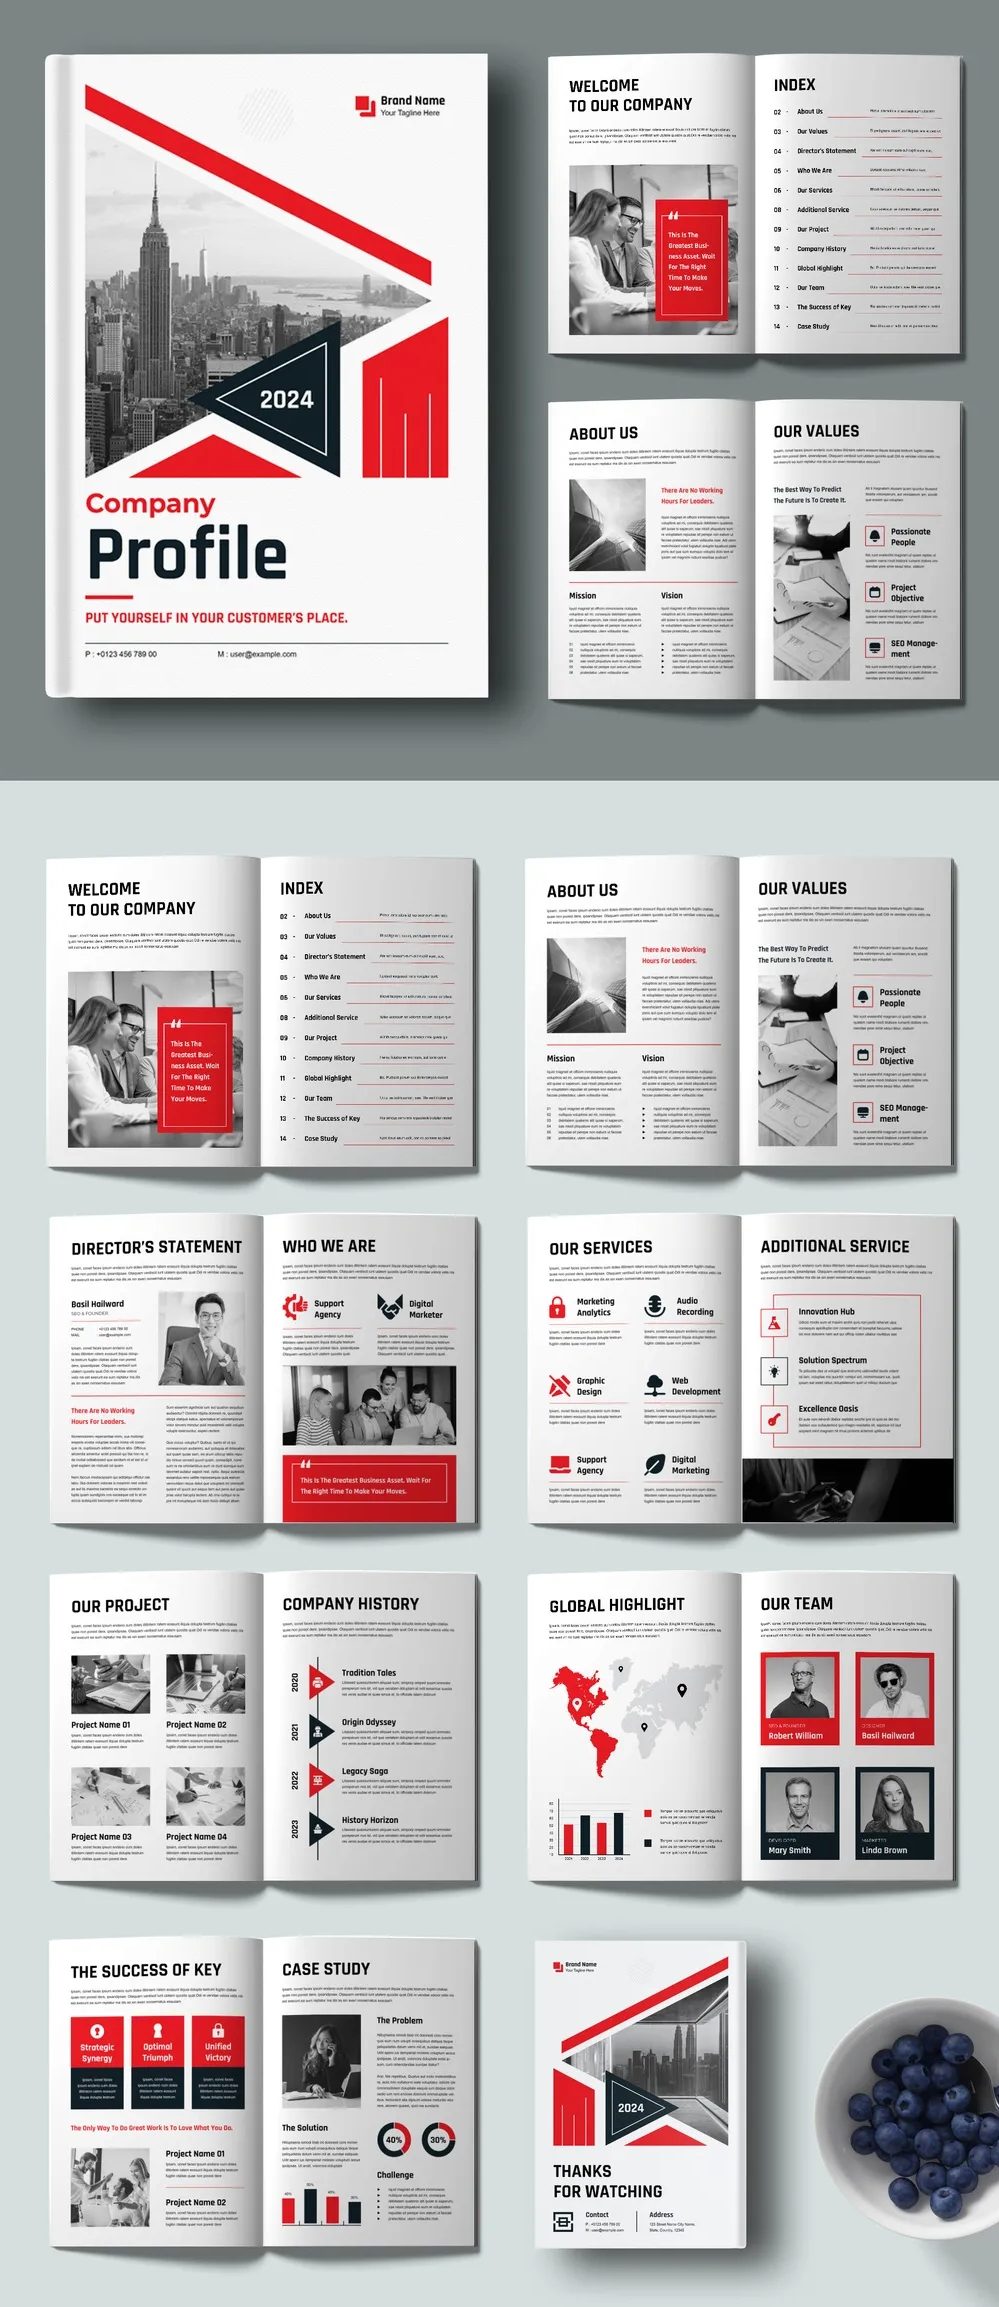 Adobestock - Company Profile Brochure Layout 725230240